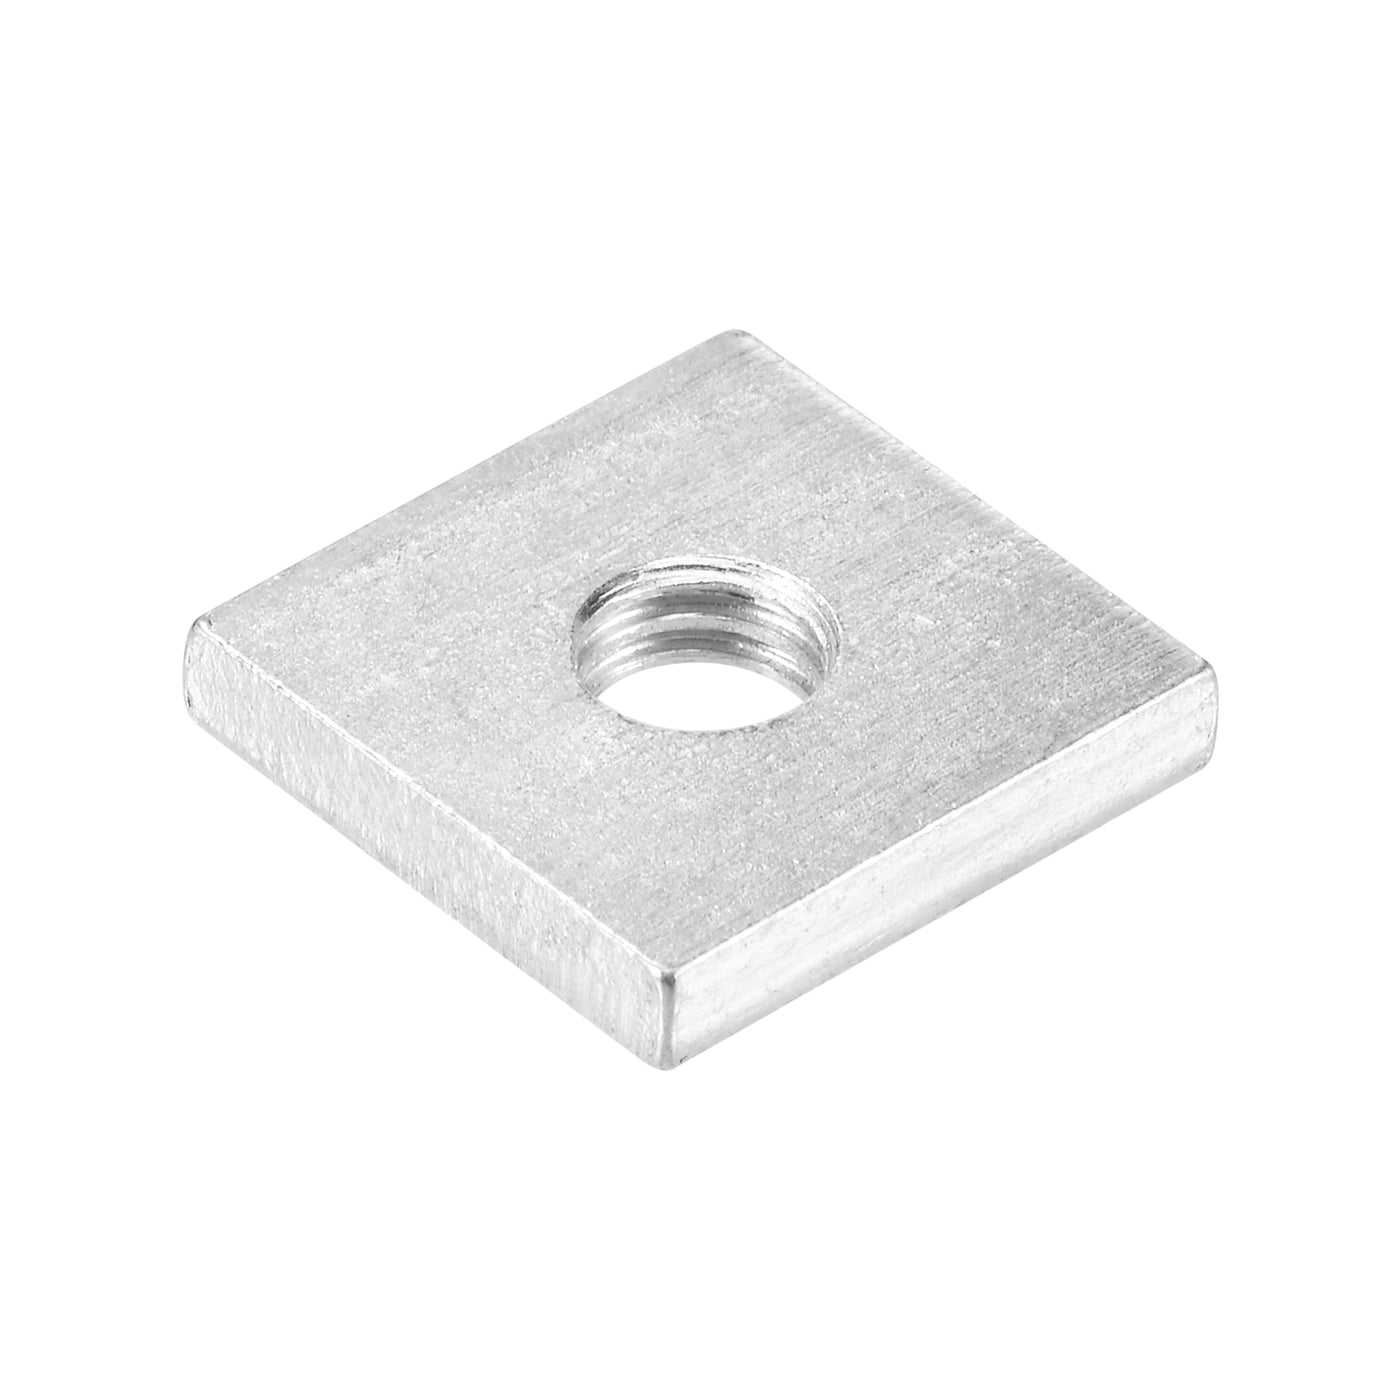 Uxcell Uxcell Square Nuts M6x20mmx5mm Zinc-Plated Metric Coarse Thread Assortment Kit 25pcs